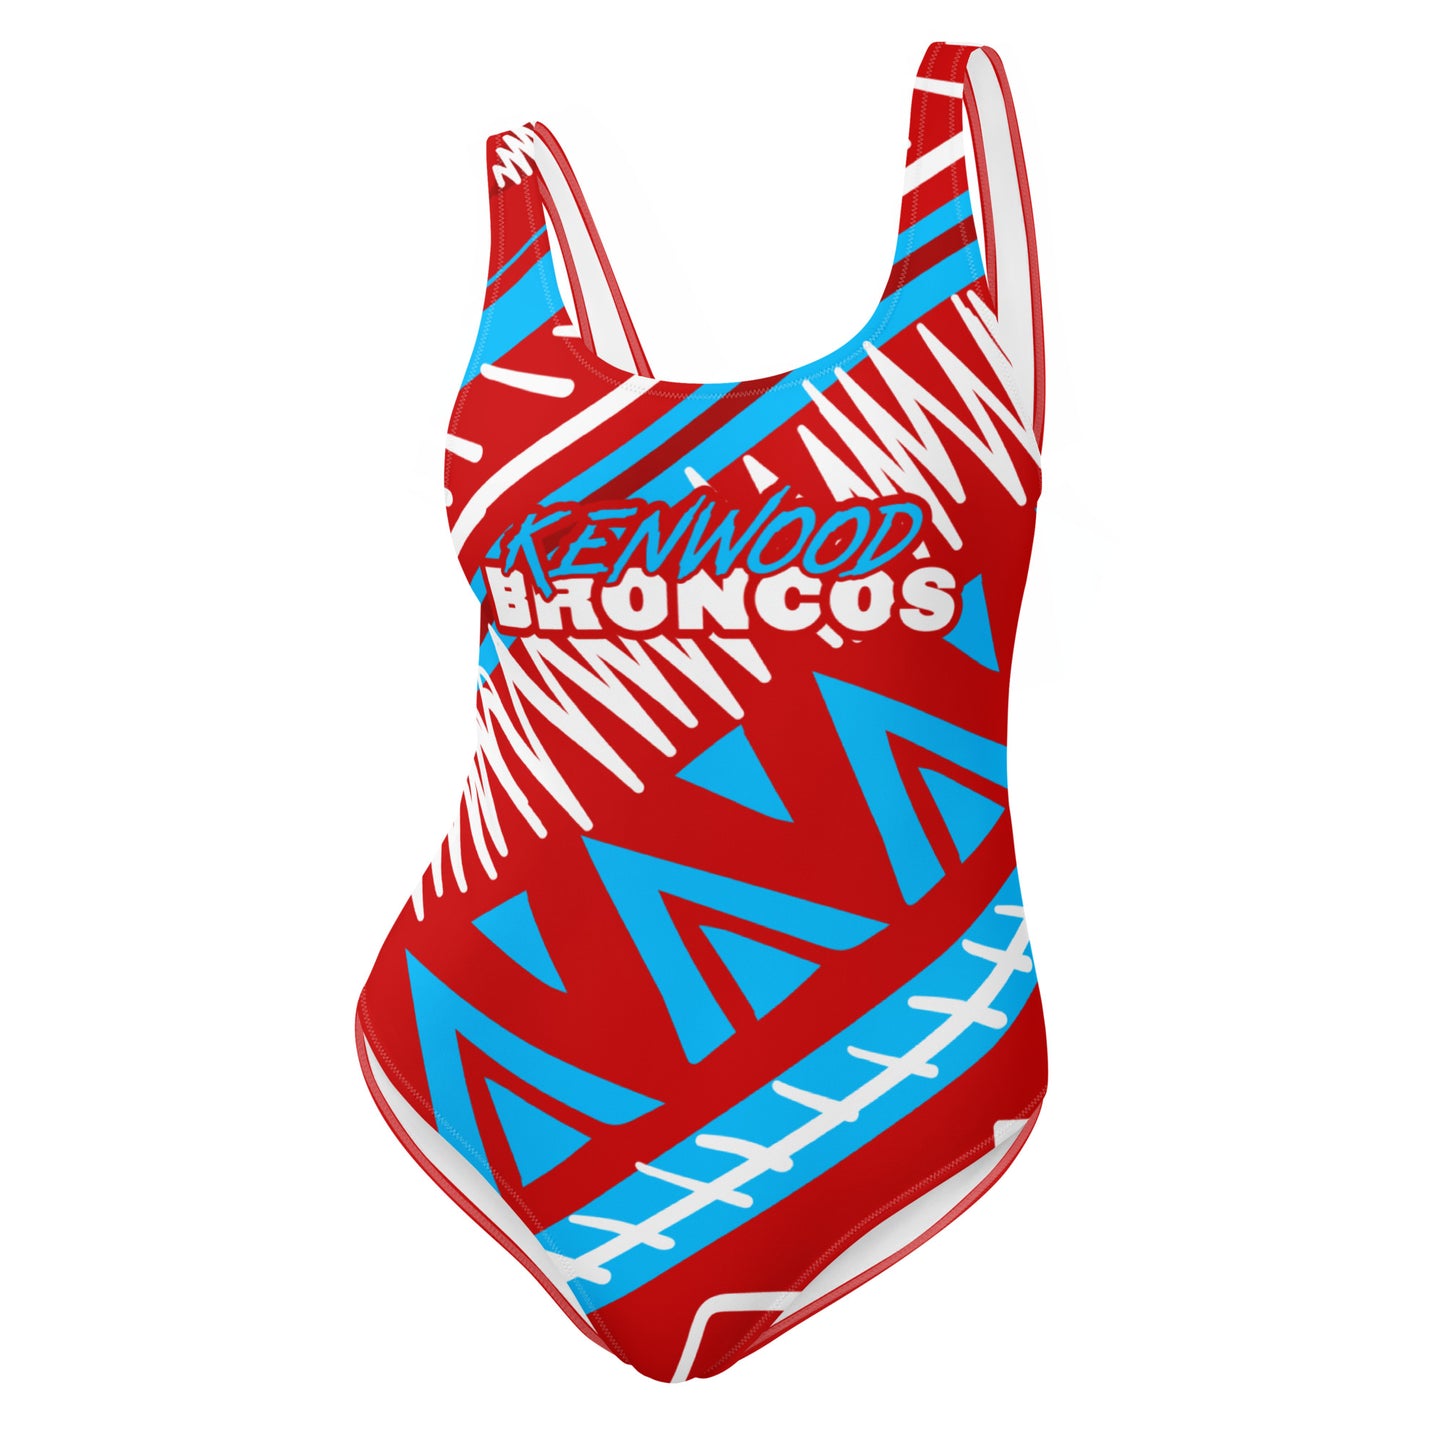 Kenwood Academy Swimsuit | Bodysuit | Kenwood Broncos